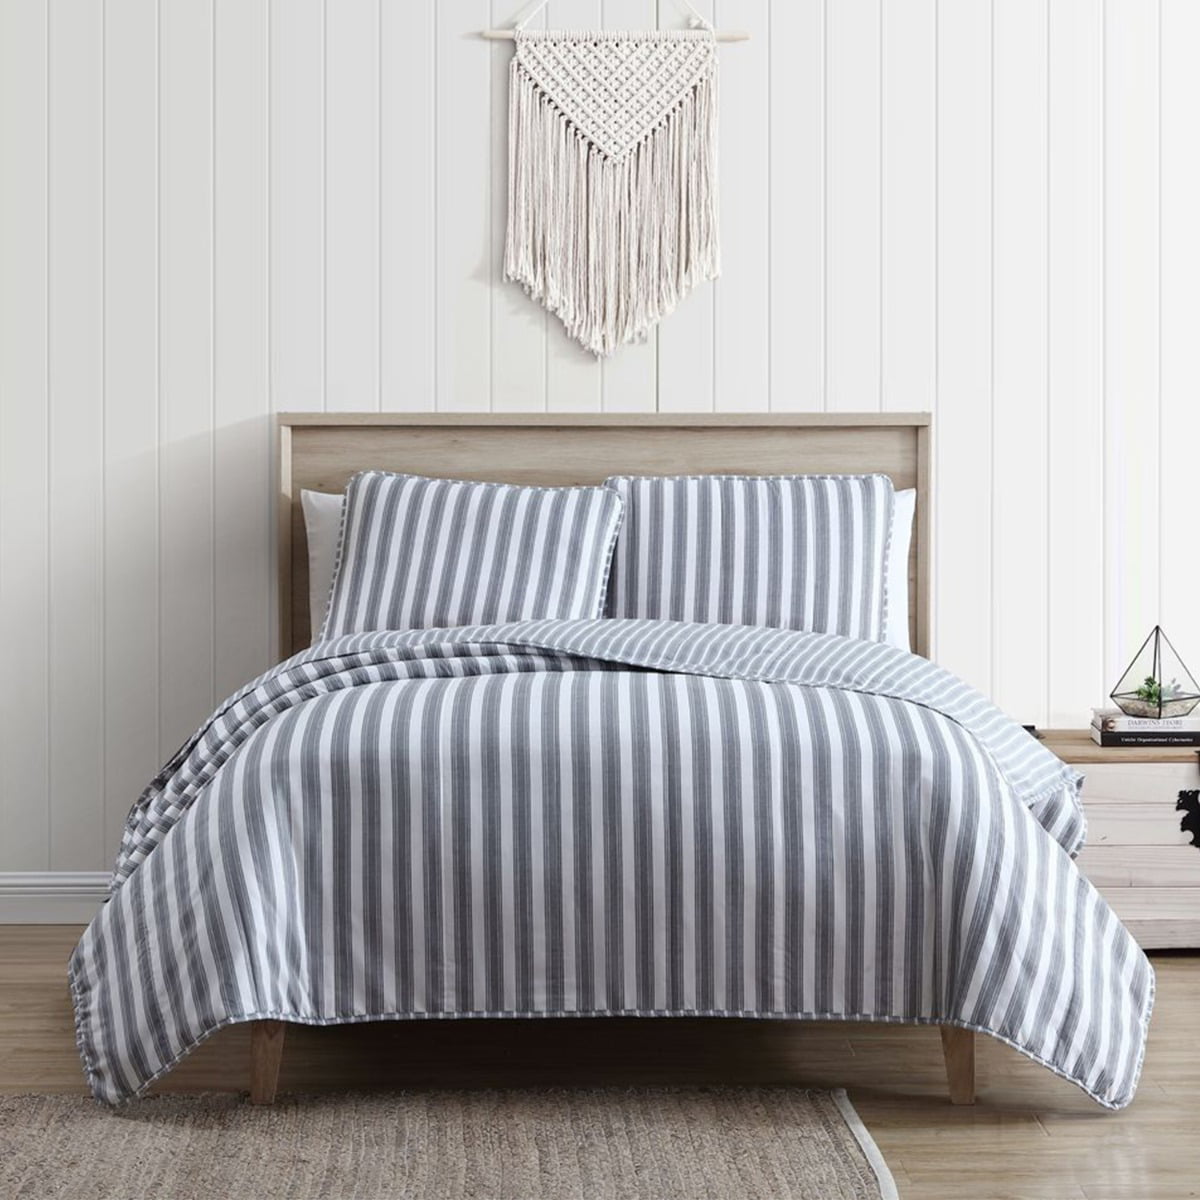 Sham Coverlet Bedspread Bedding Set, Ticking Stripe Duvet Cover King